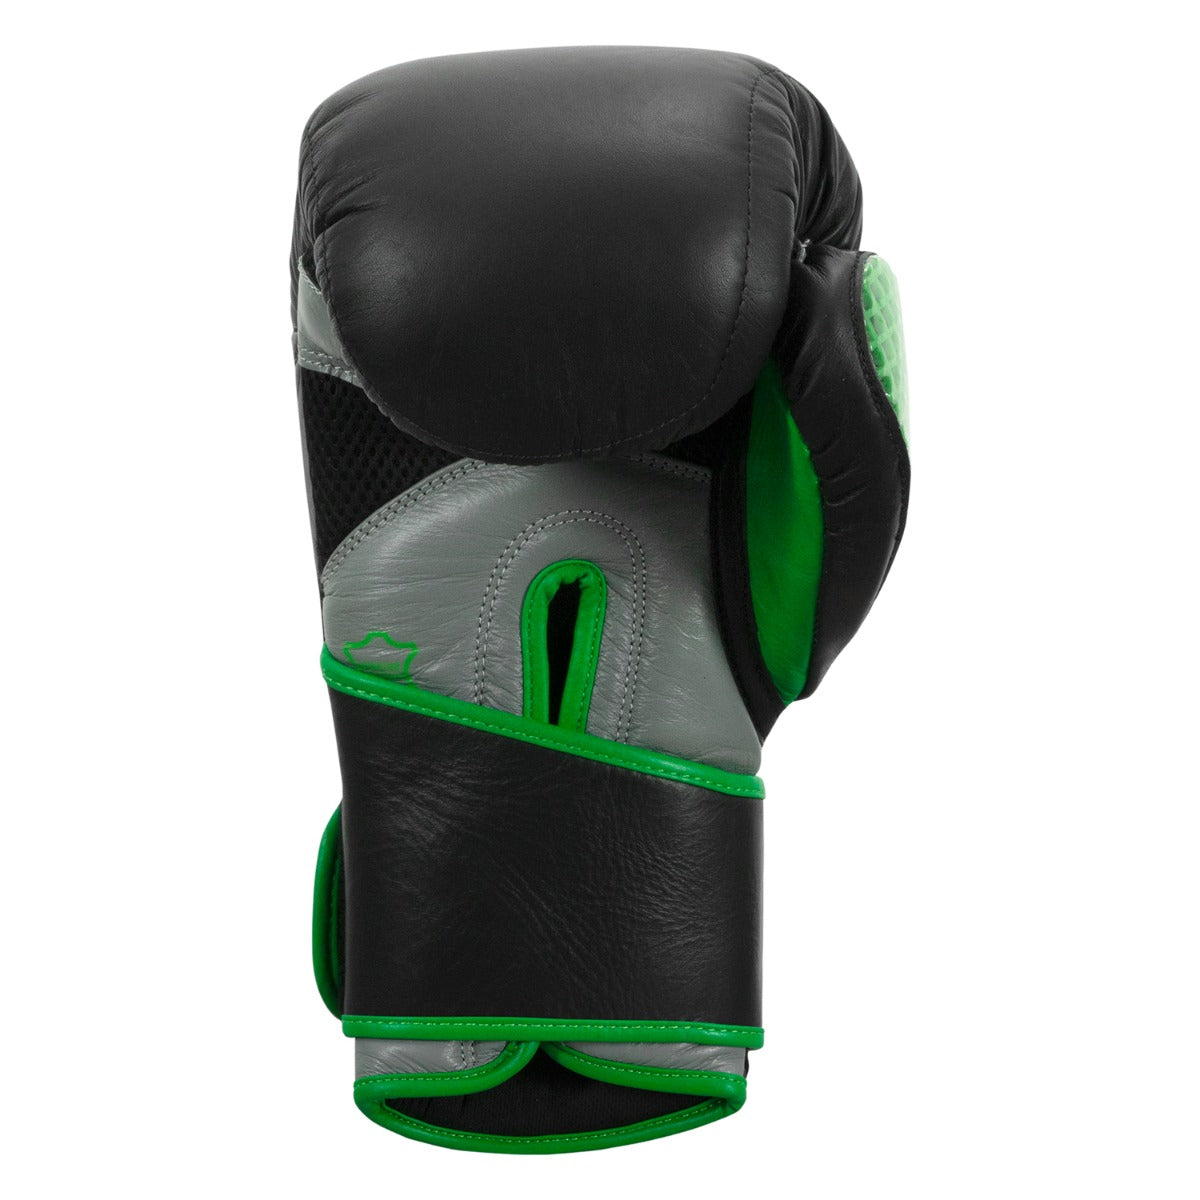 Matrix Black Boxing Gloves